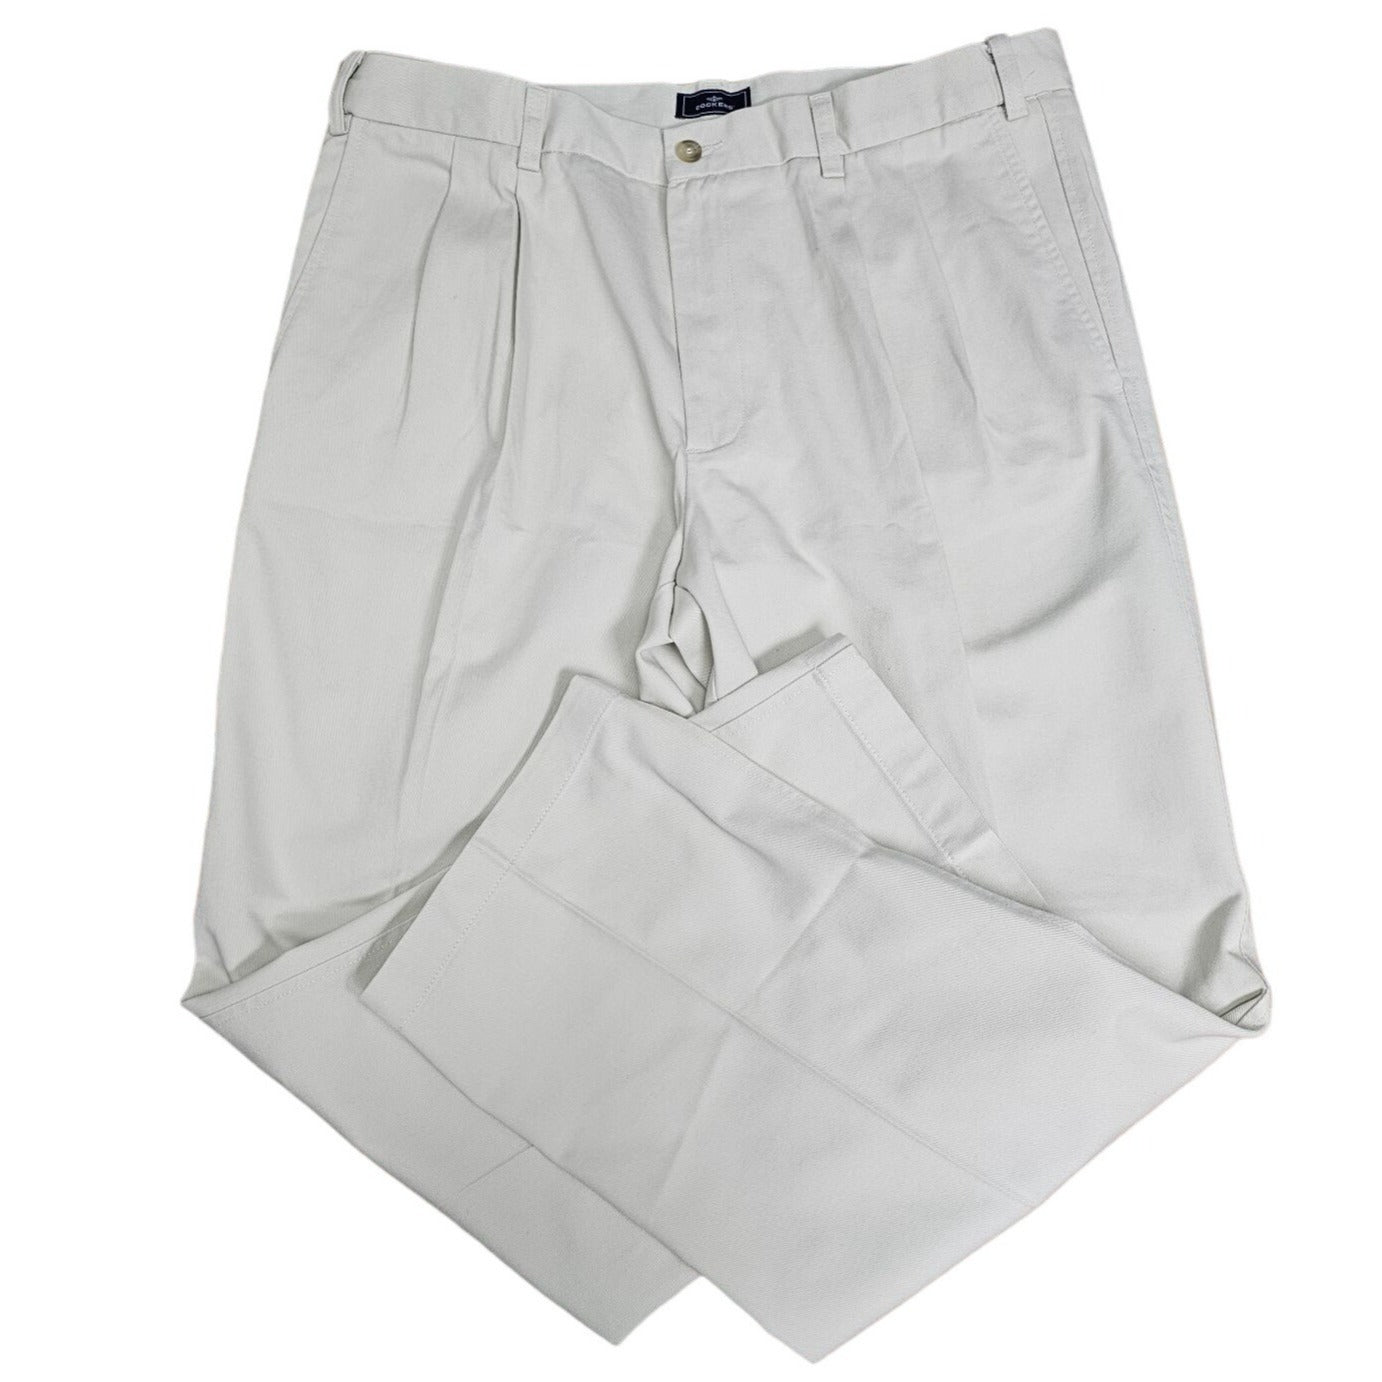 36 x 29 Dockers Pleated Everyday Cotton Cream Dress Pants Size 36 x 29